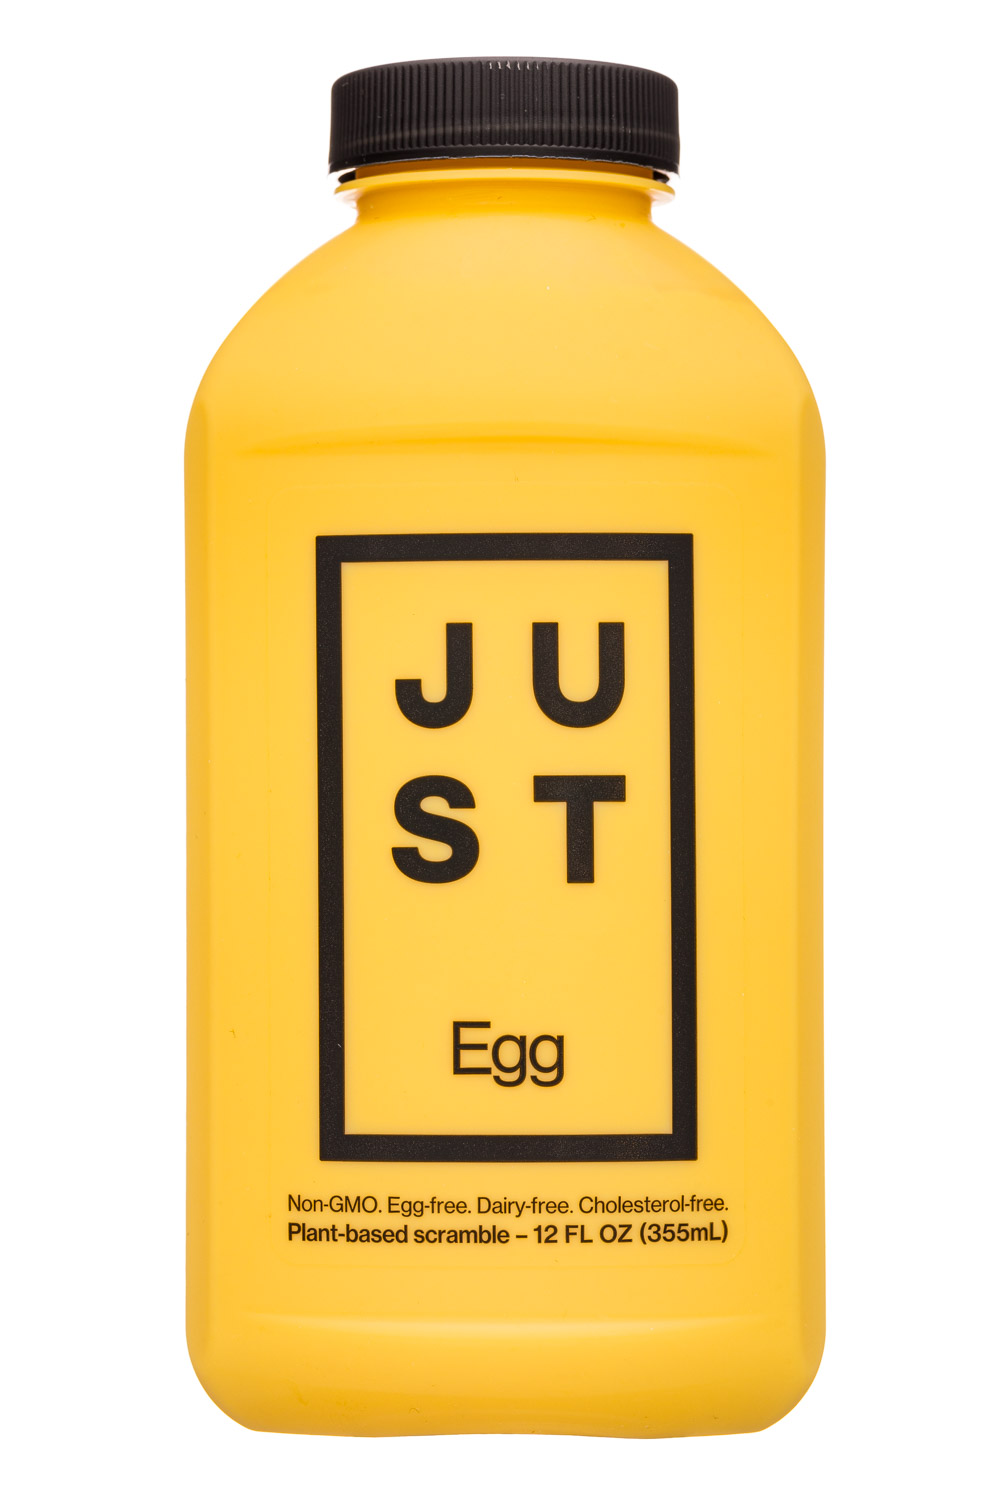 Just Egg Liquid